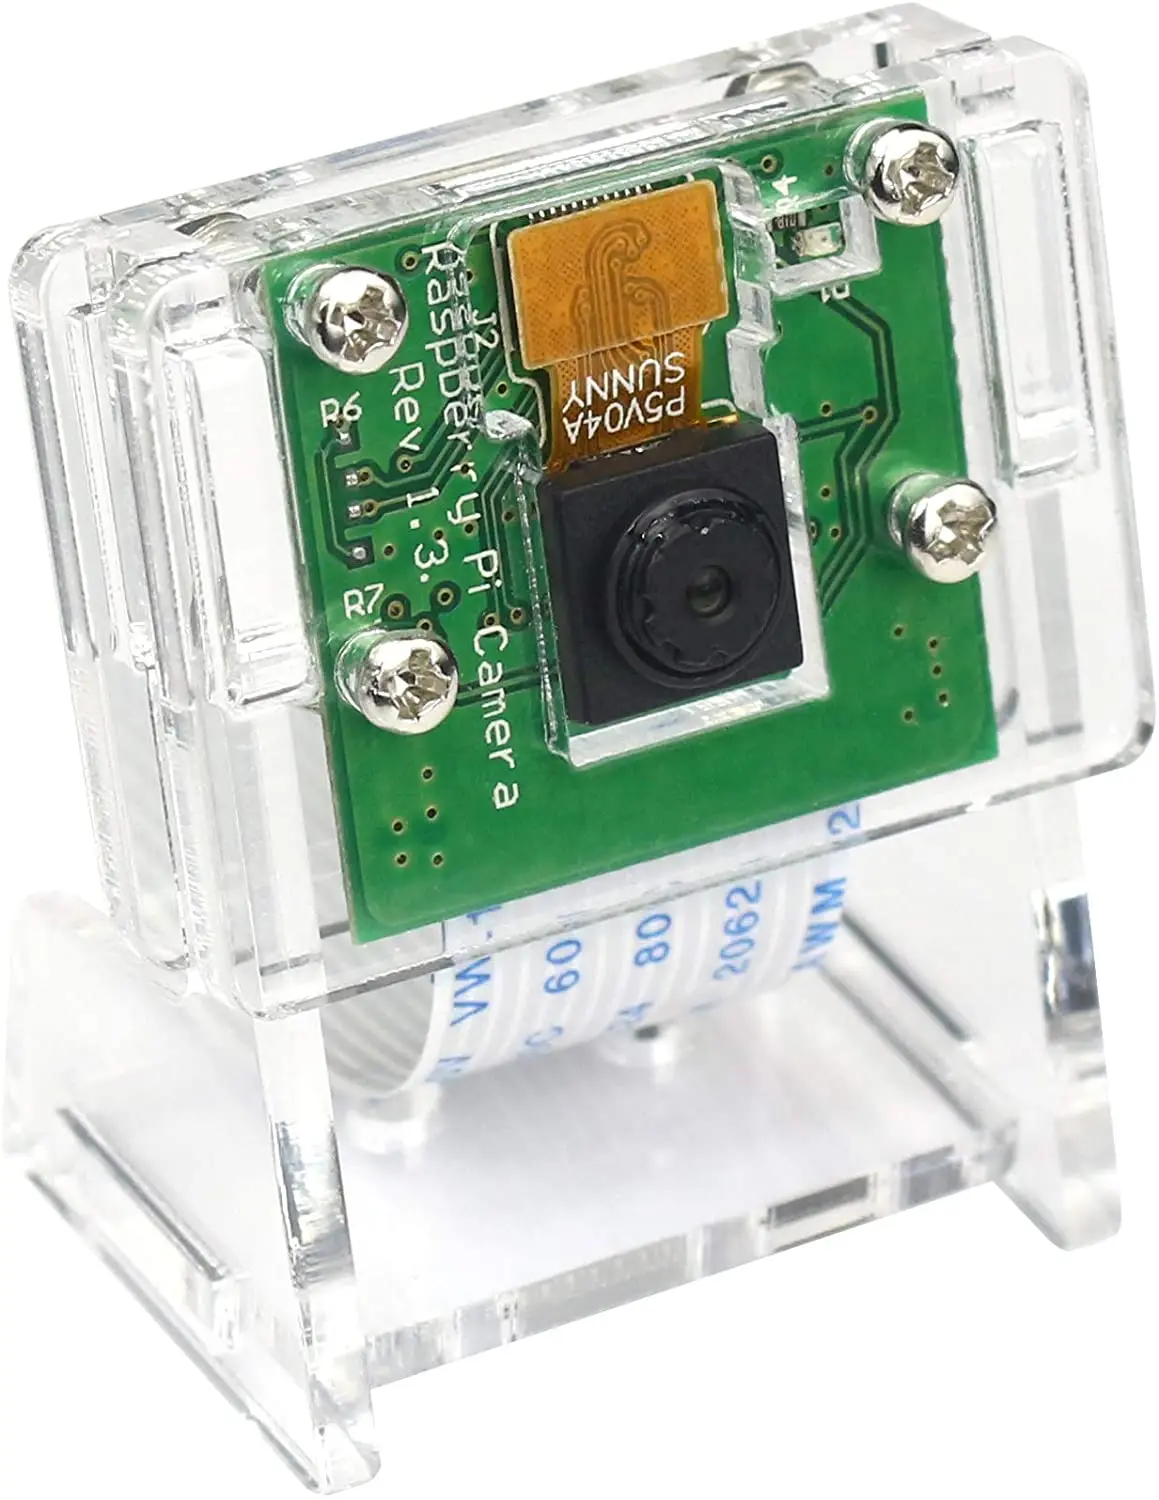 A 2 1 5MP 1080p OV5647 Sensor HD Video Webcam Night Vision Camera SC15-1 Kuman Camera Module for Raspberry Pi Zero W 3 Model B B